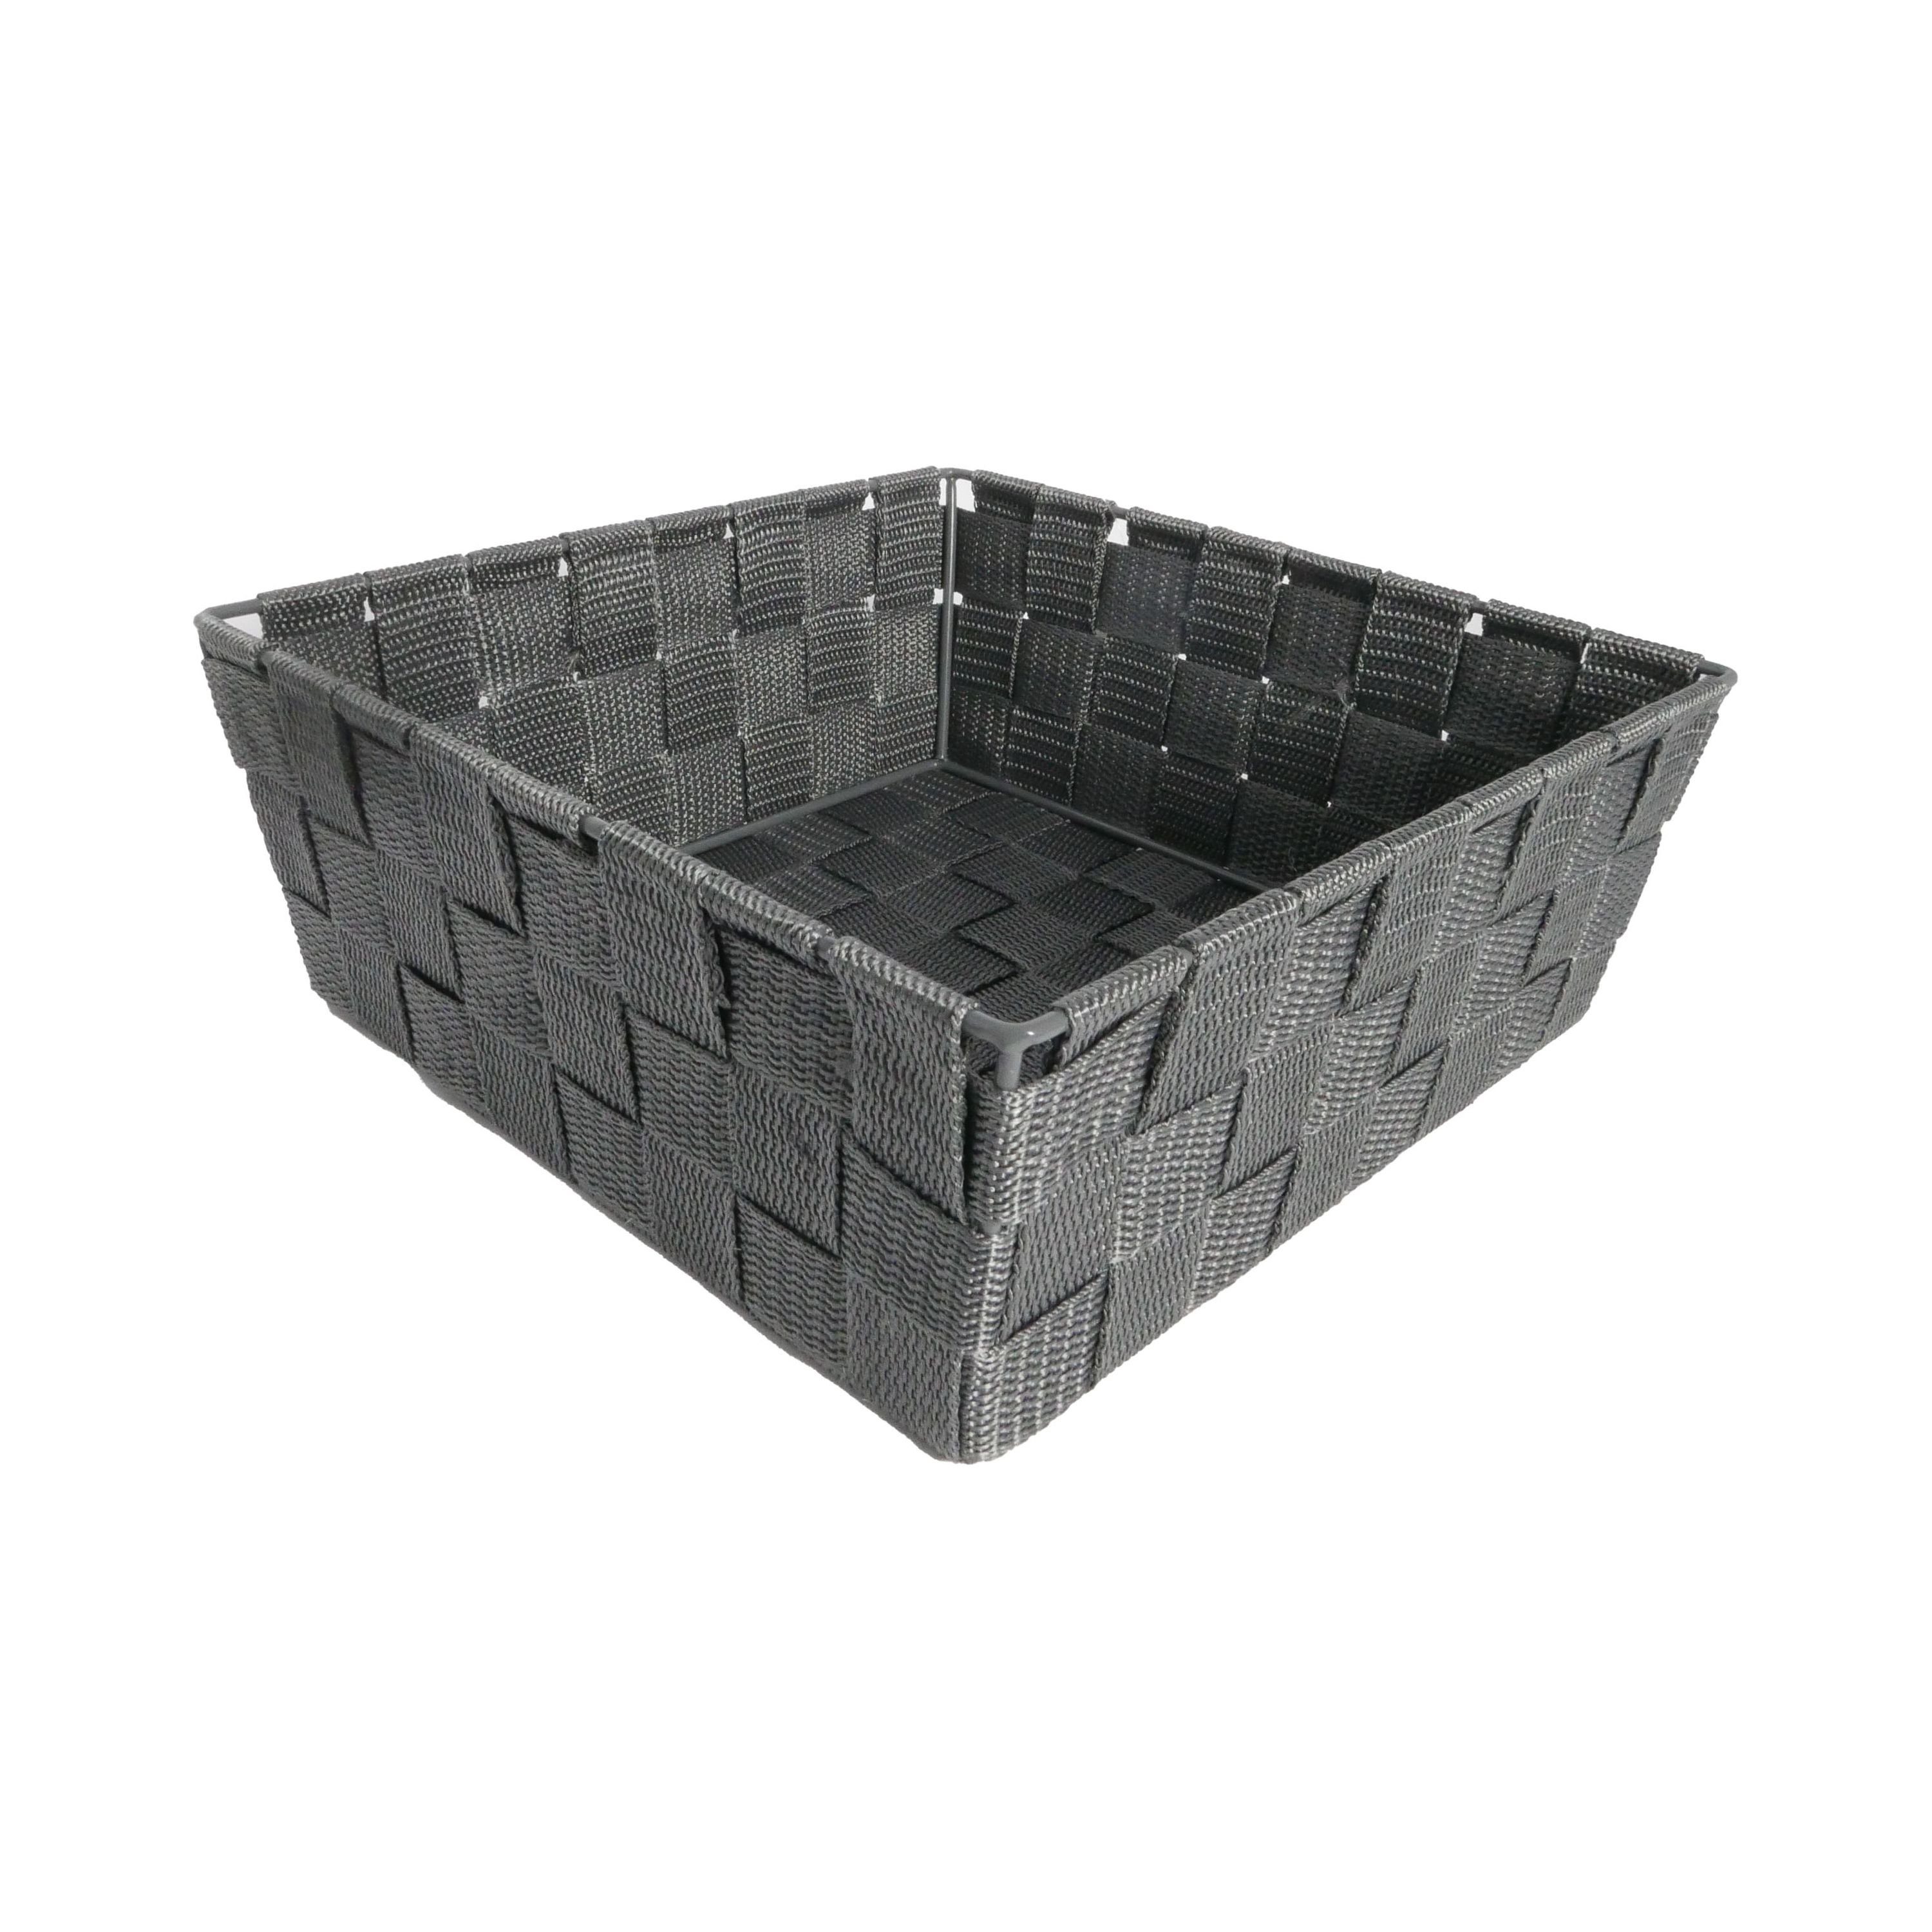 B&S Regalkorb Regalkorb Geflecht grau Ordnungsbox quadatisch 24 x 24 cm